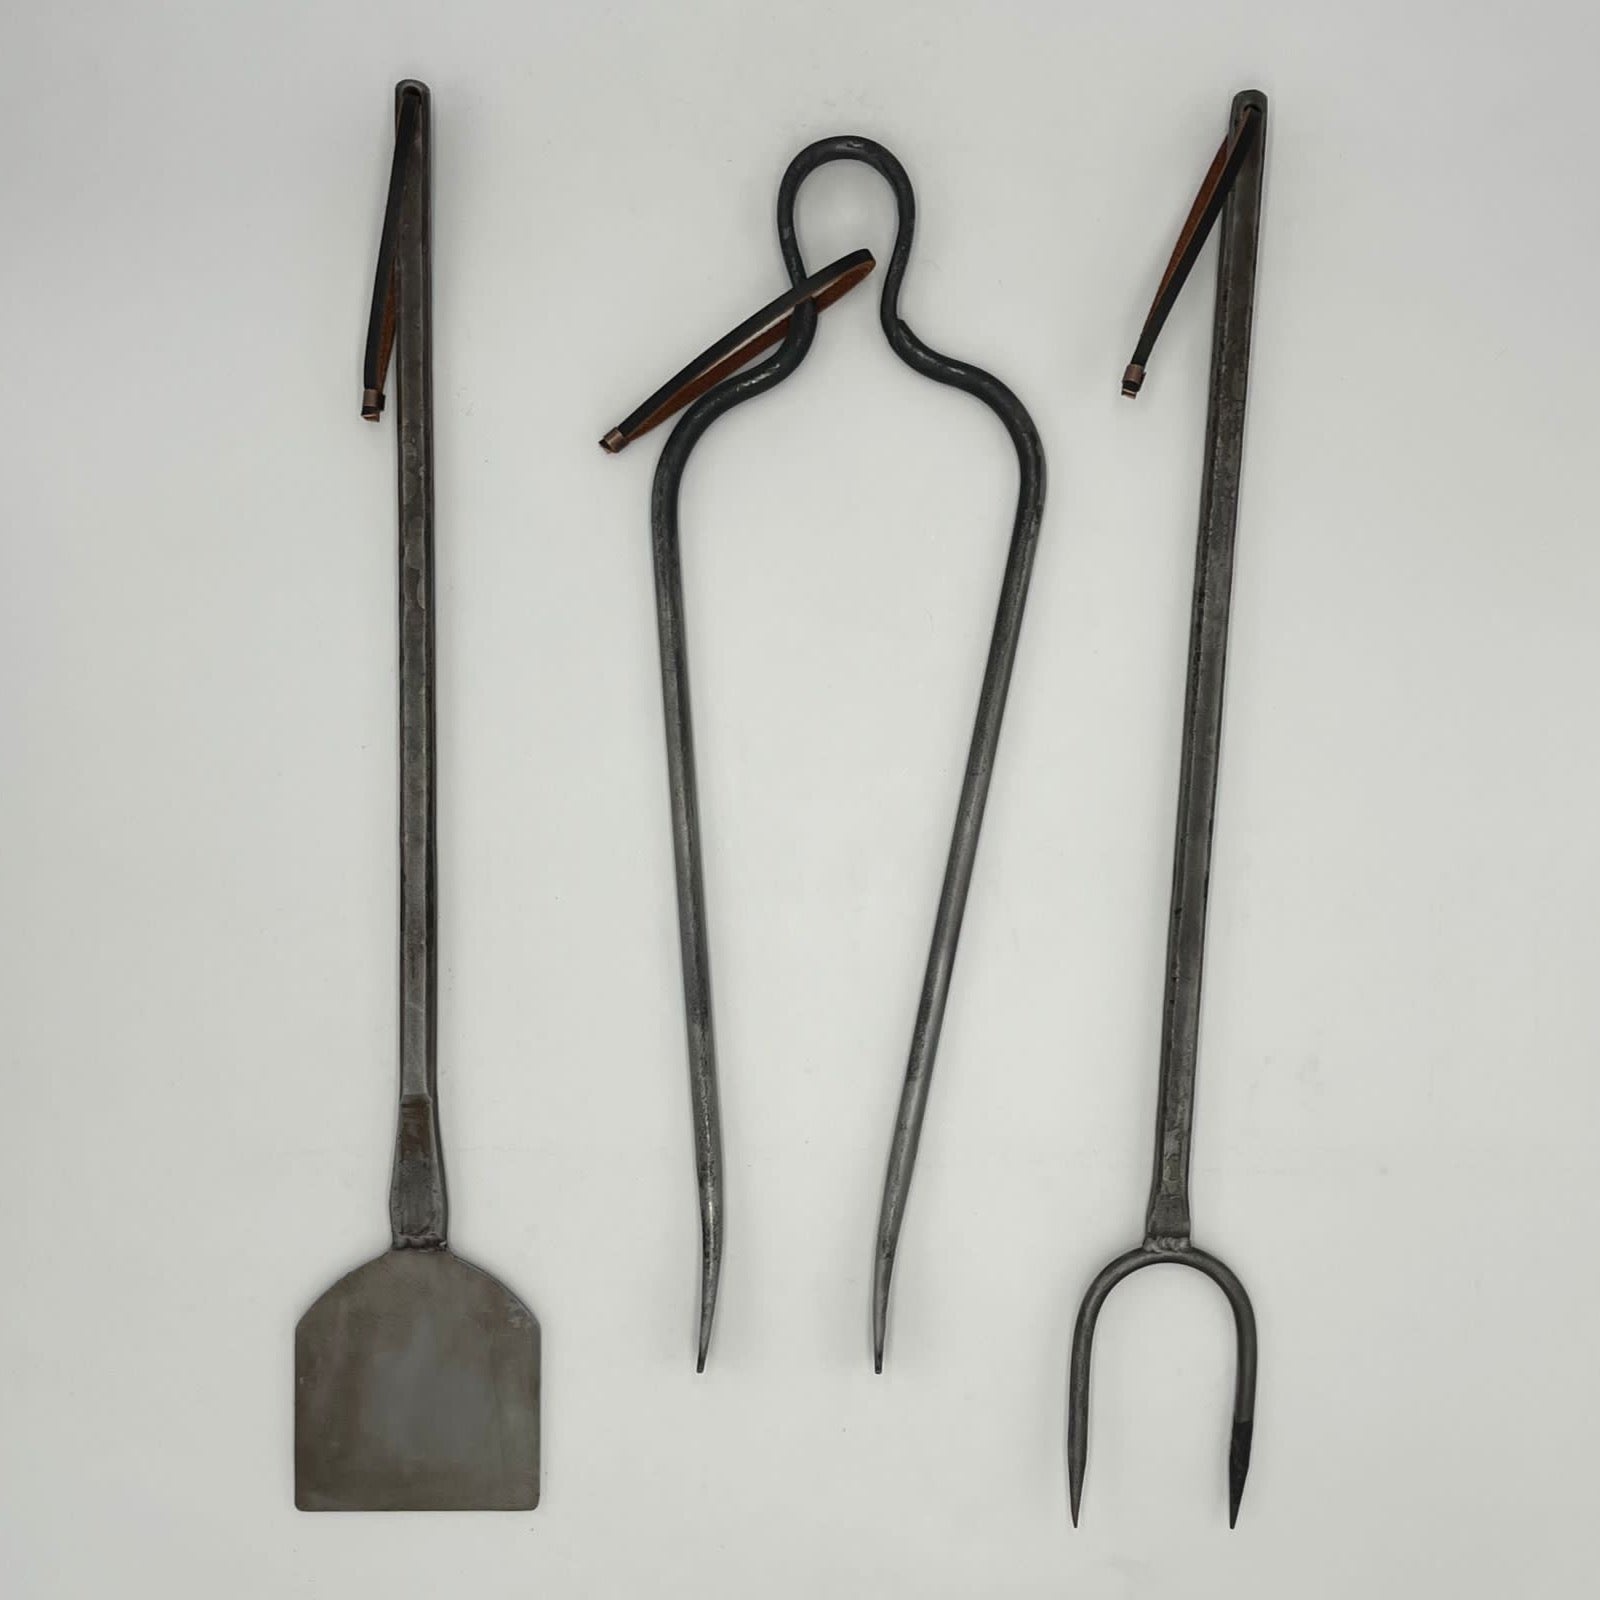 Katto Grill Tools - Set of 3